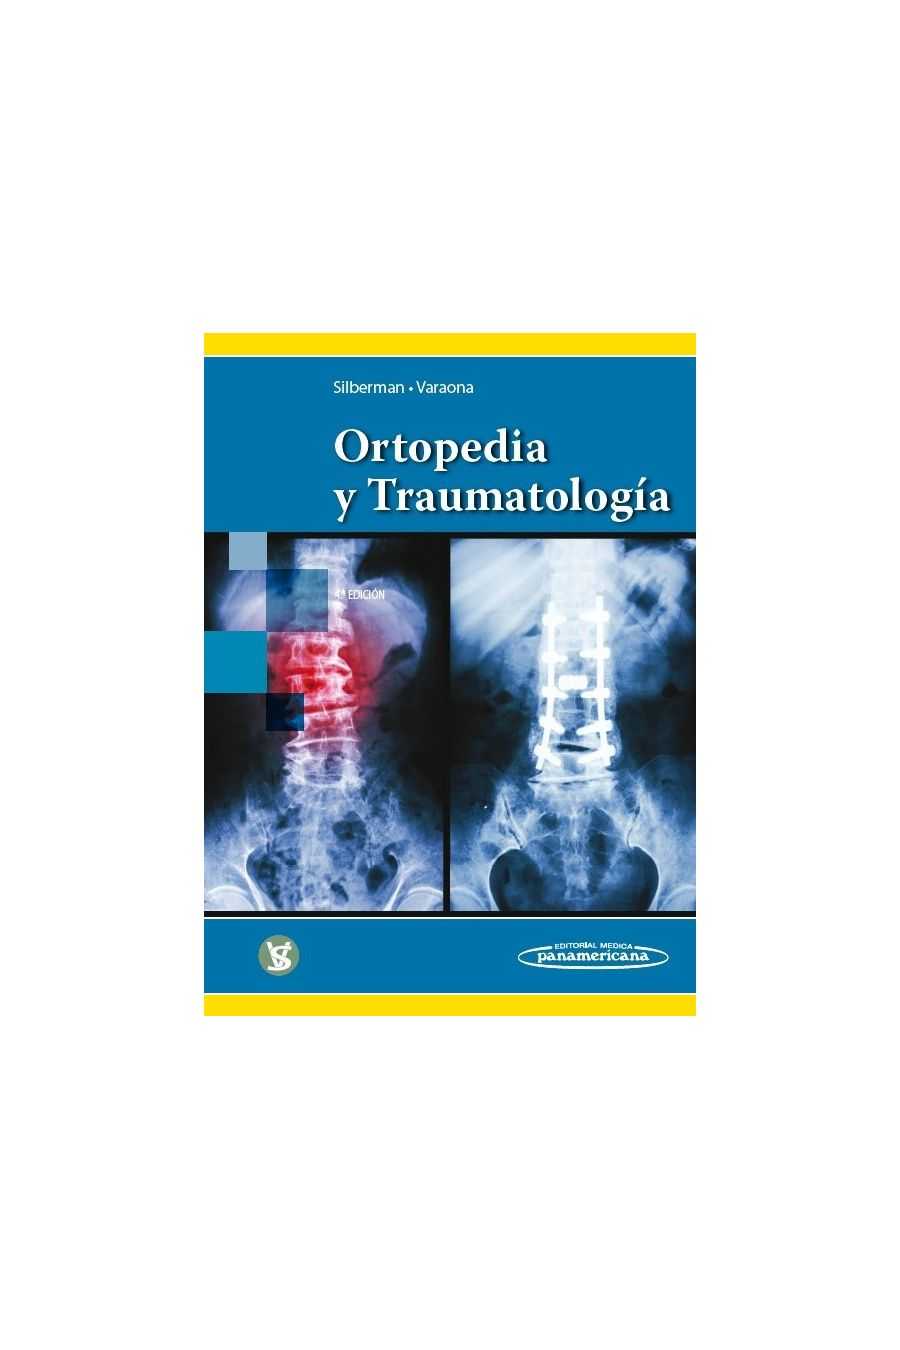 Ortopedia y Traumatología. Silberman